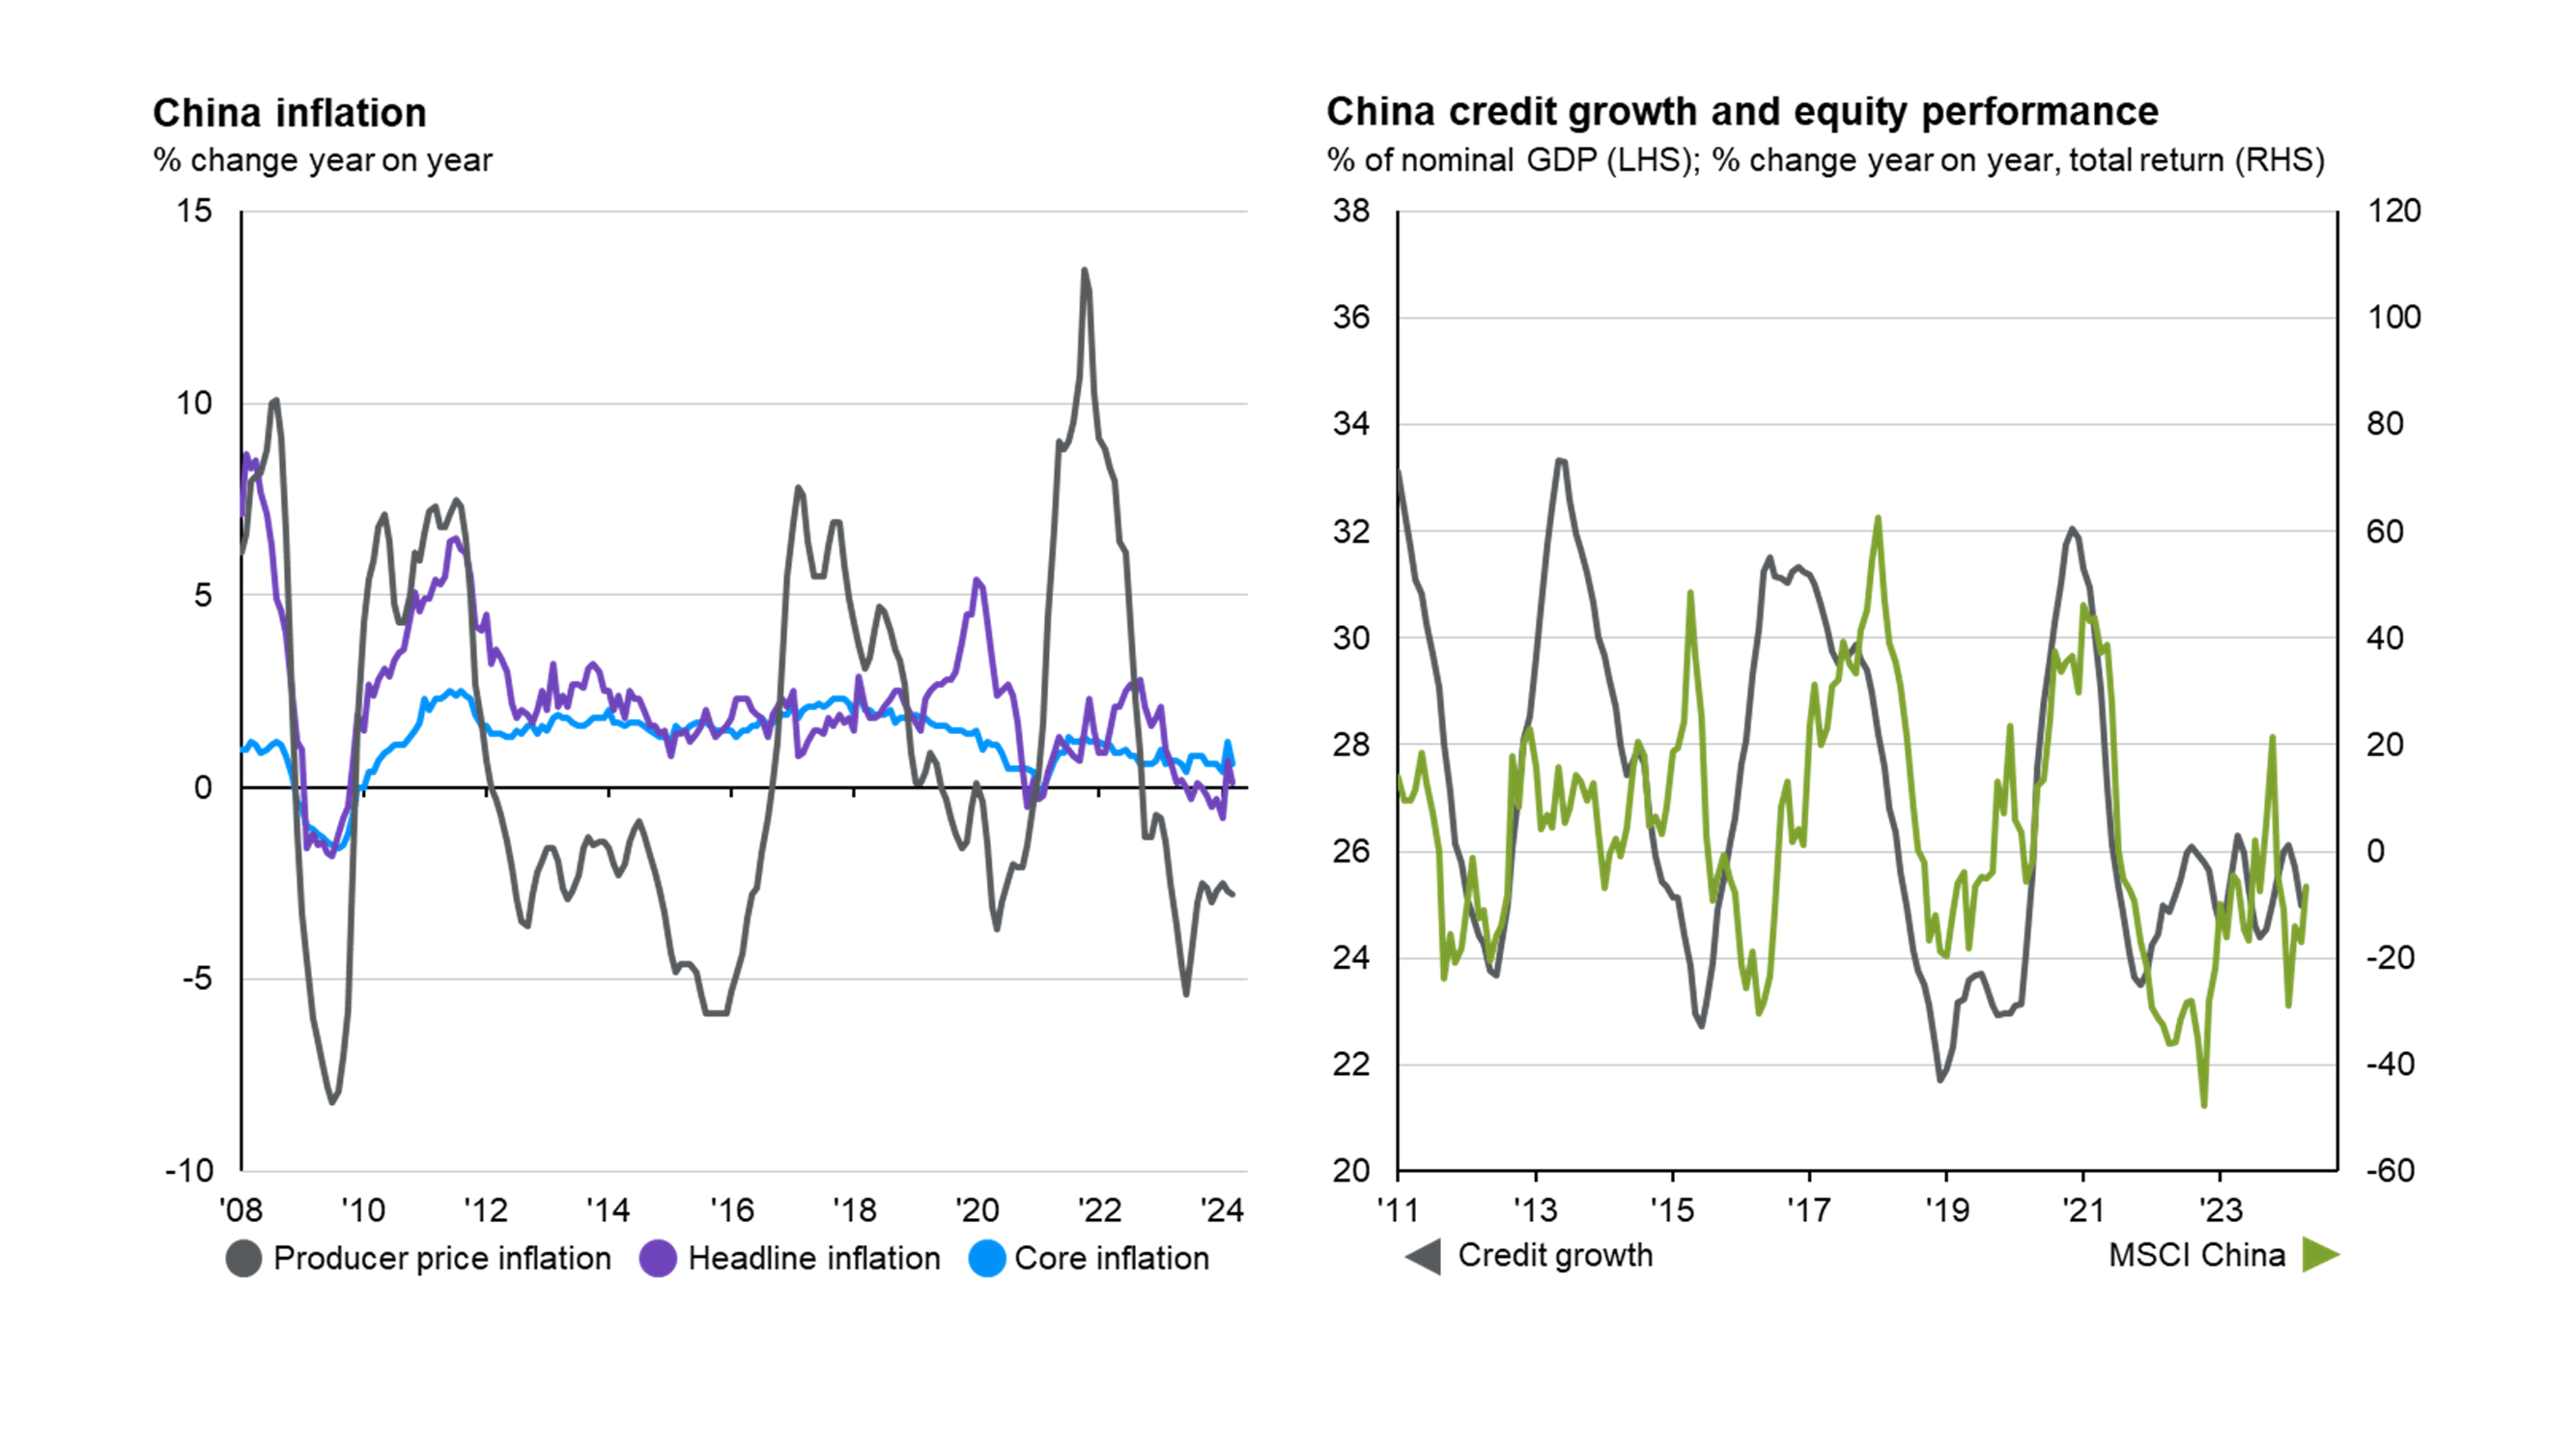 China inflation and credit dynamics